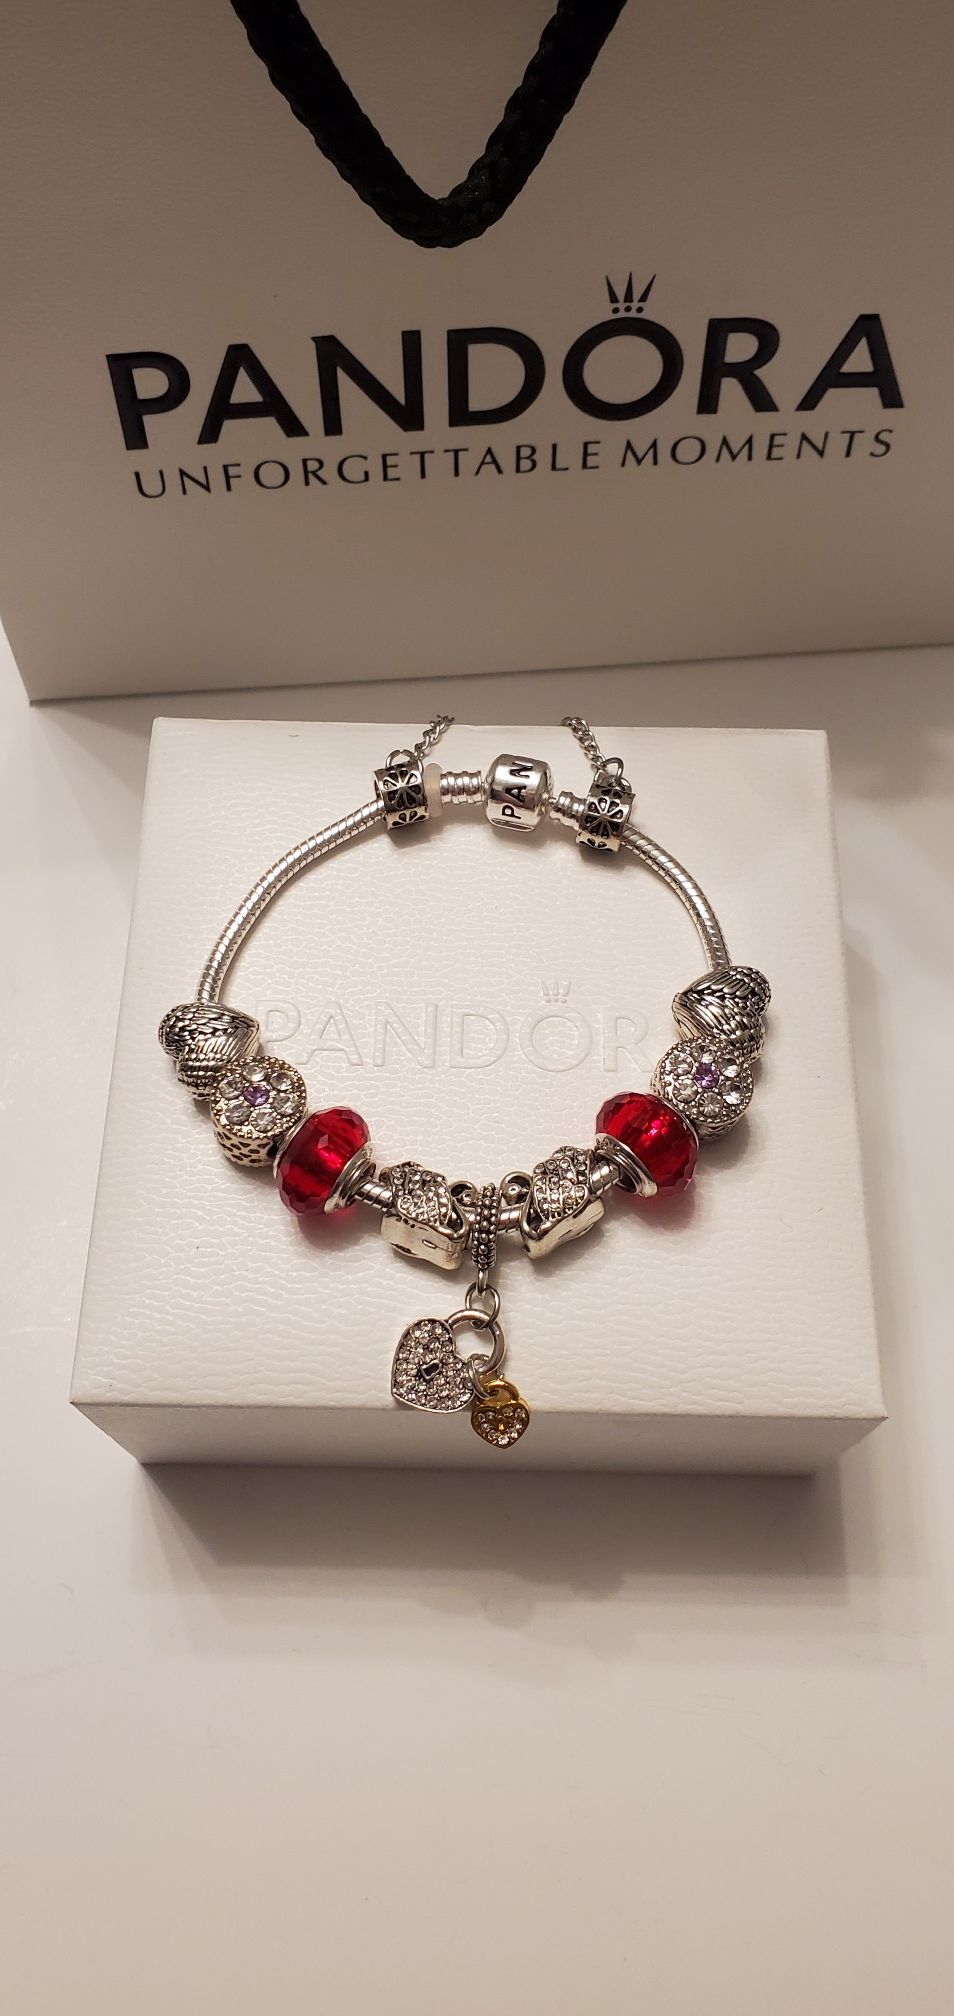 Pandora Charm Bracelet with Charms